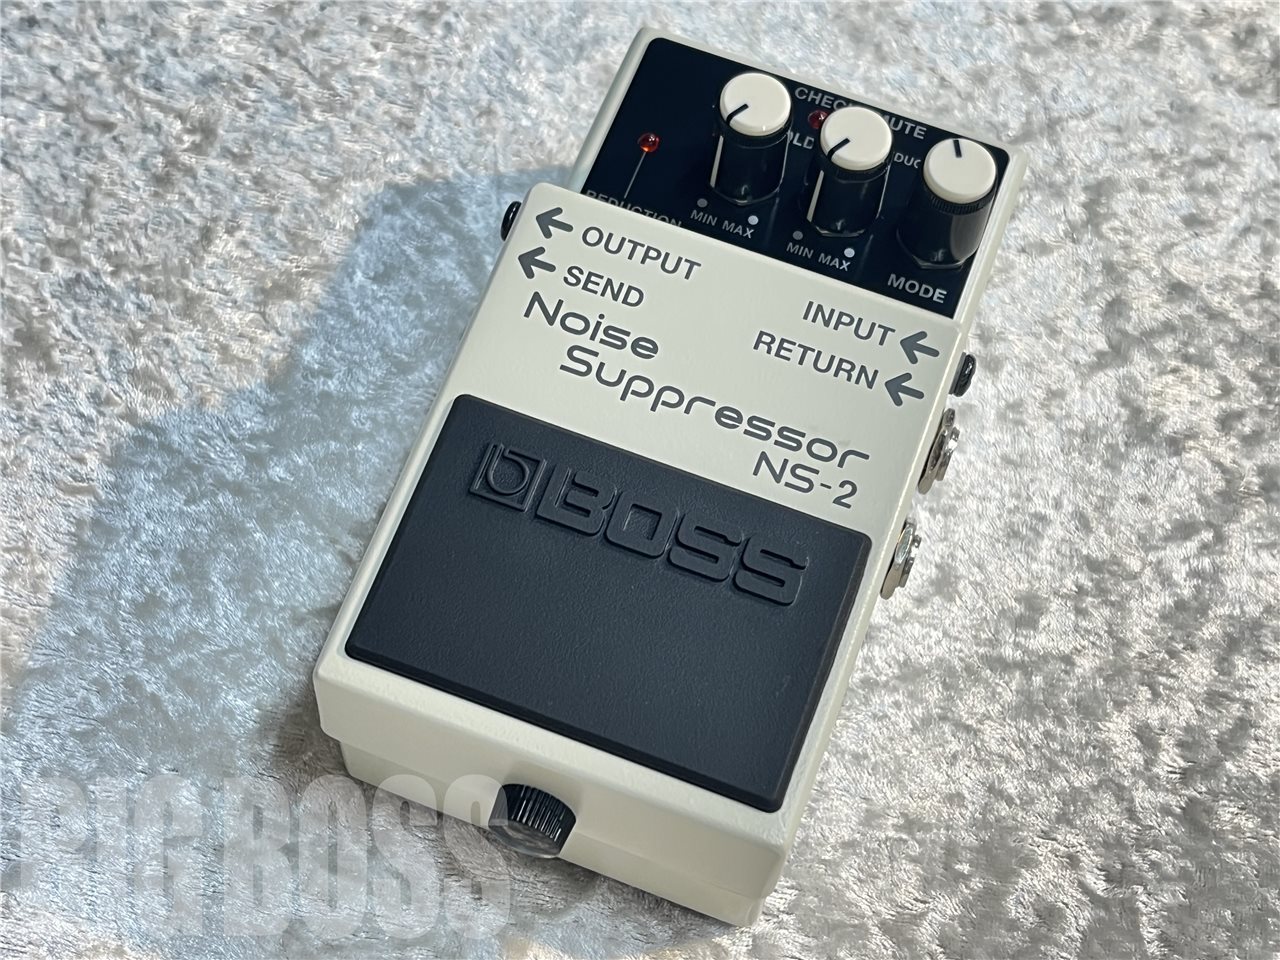 BOSS NS-2 (Noise Suppressor)